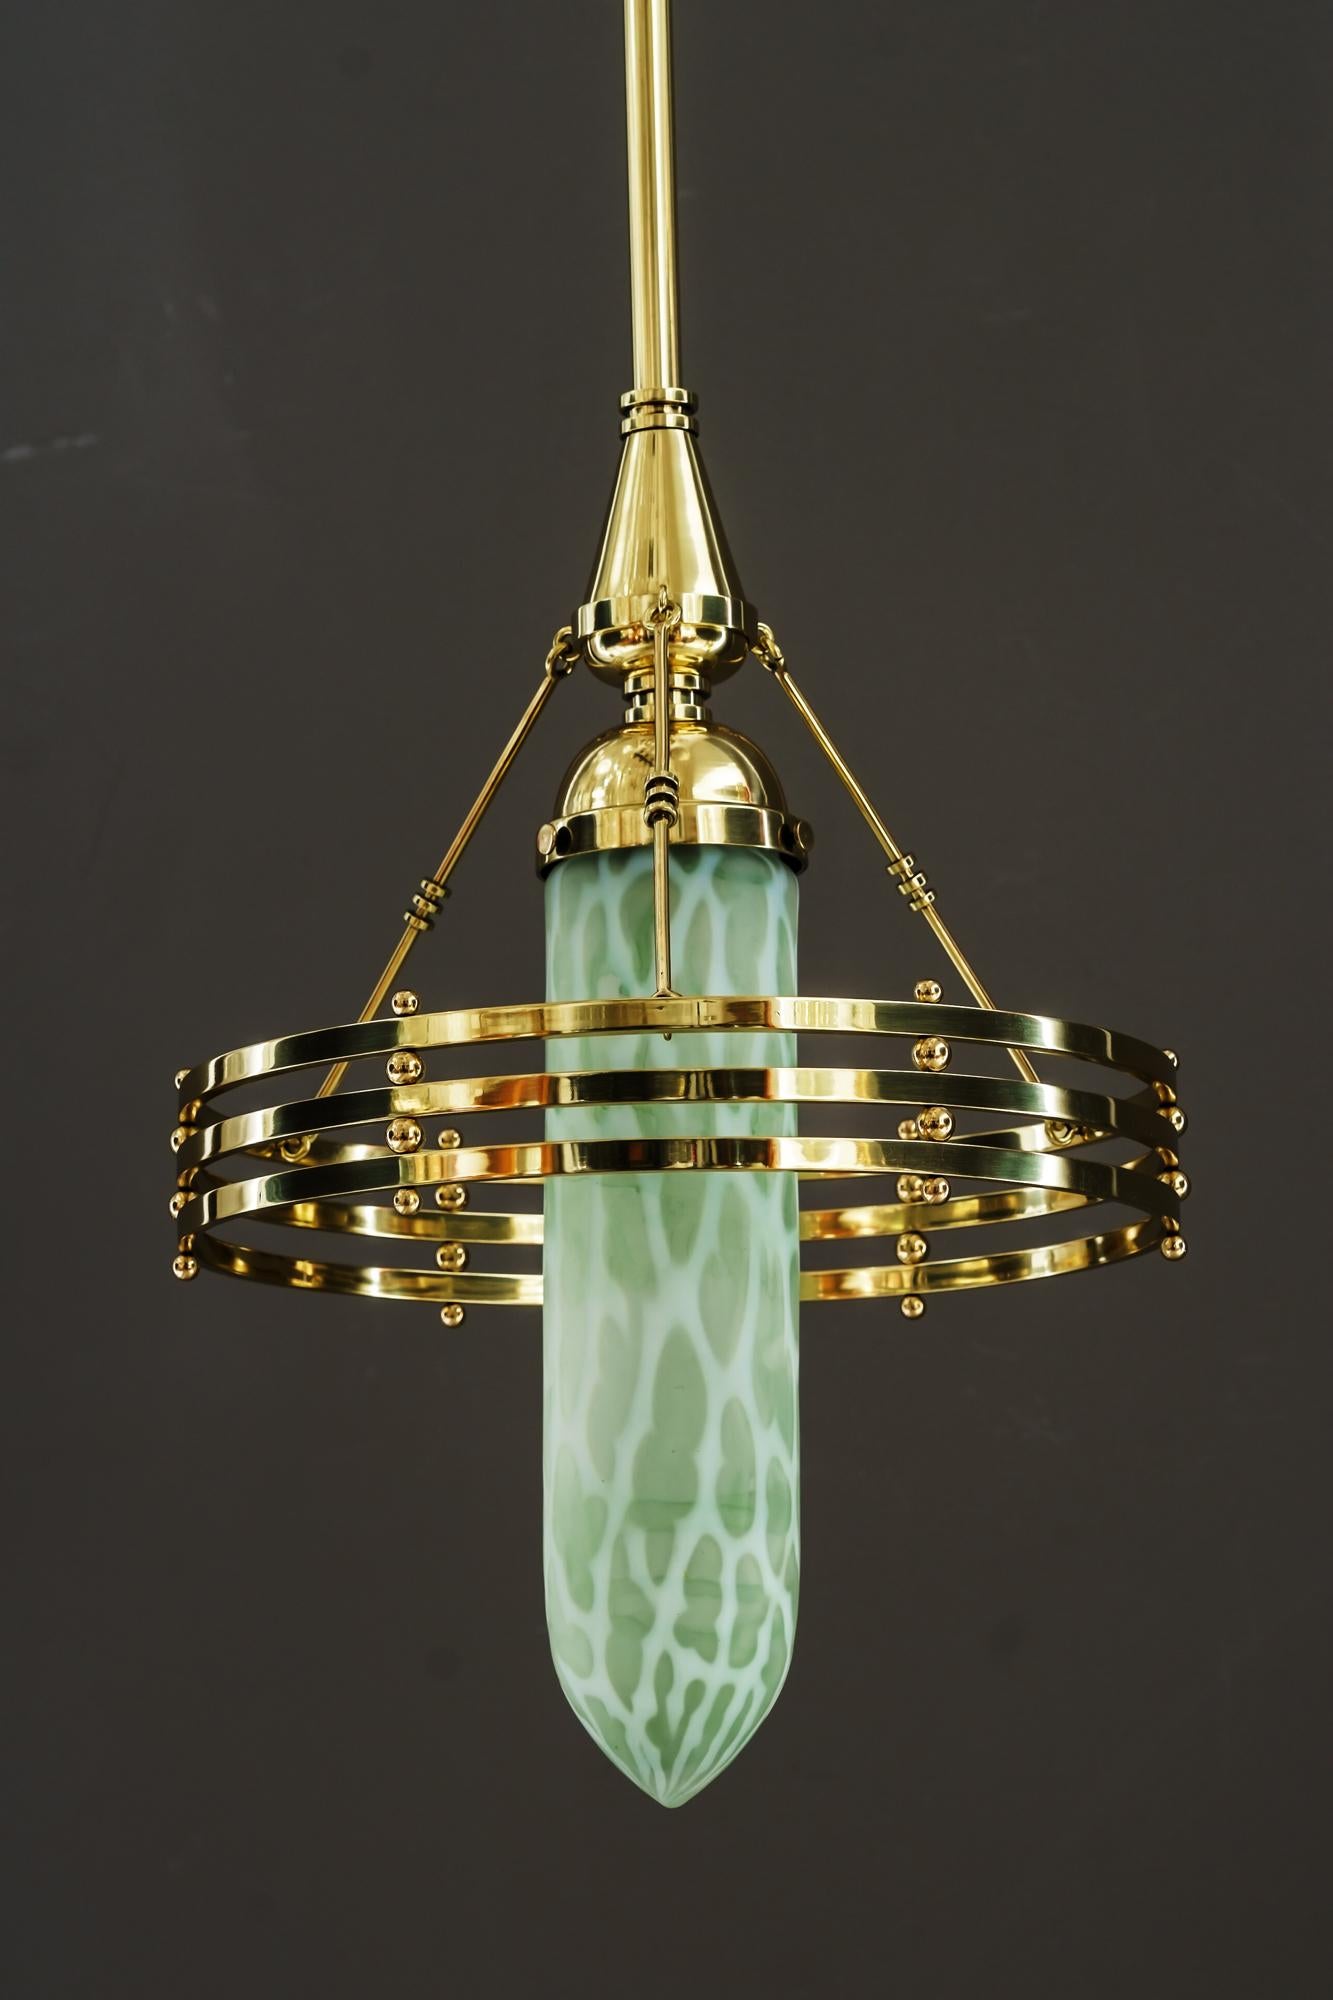 Jugendstil Pendant with palme koenig glass shade vienna around 1910
Polished and stove enamelled.